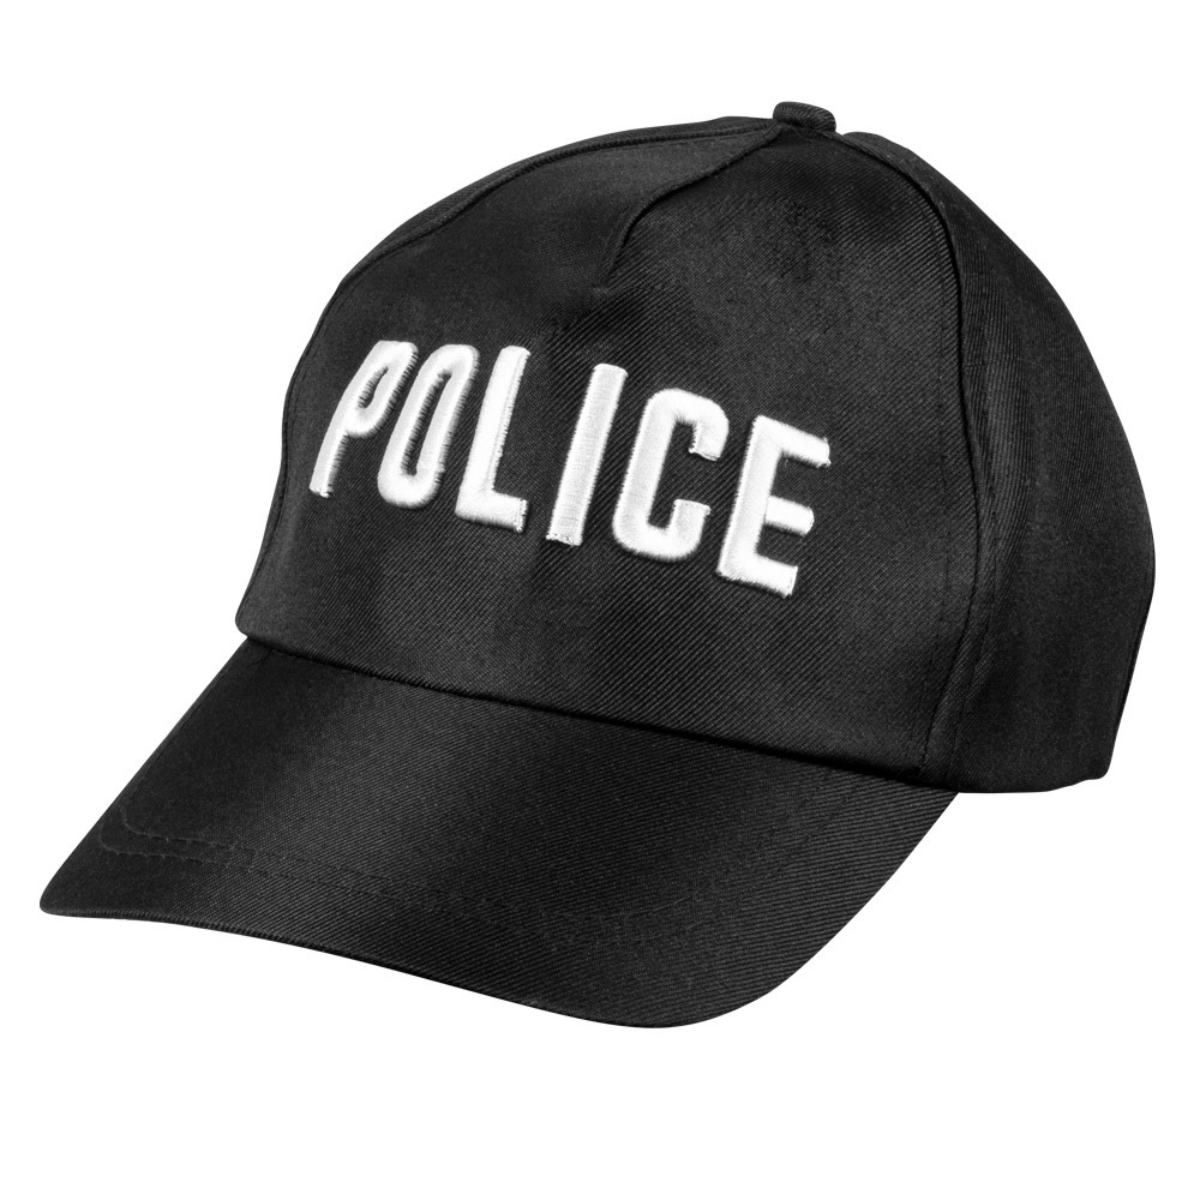 Police Caps Svart